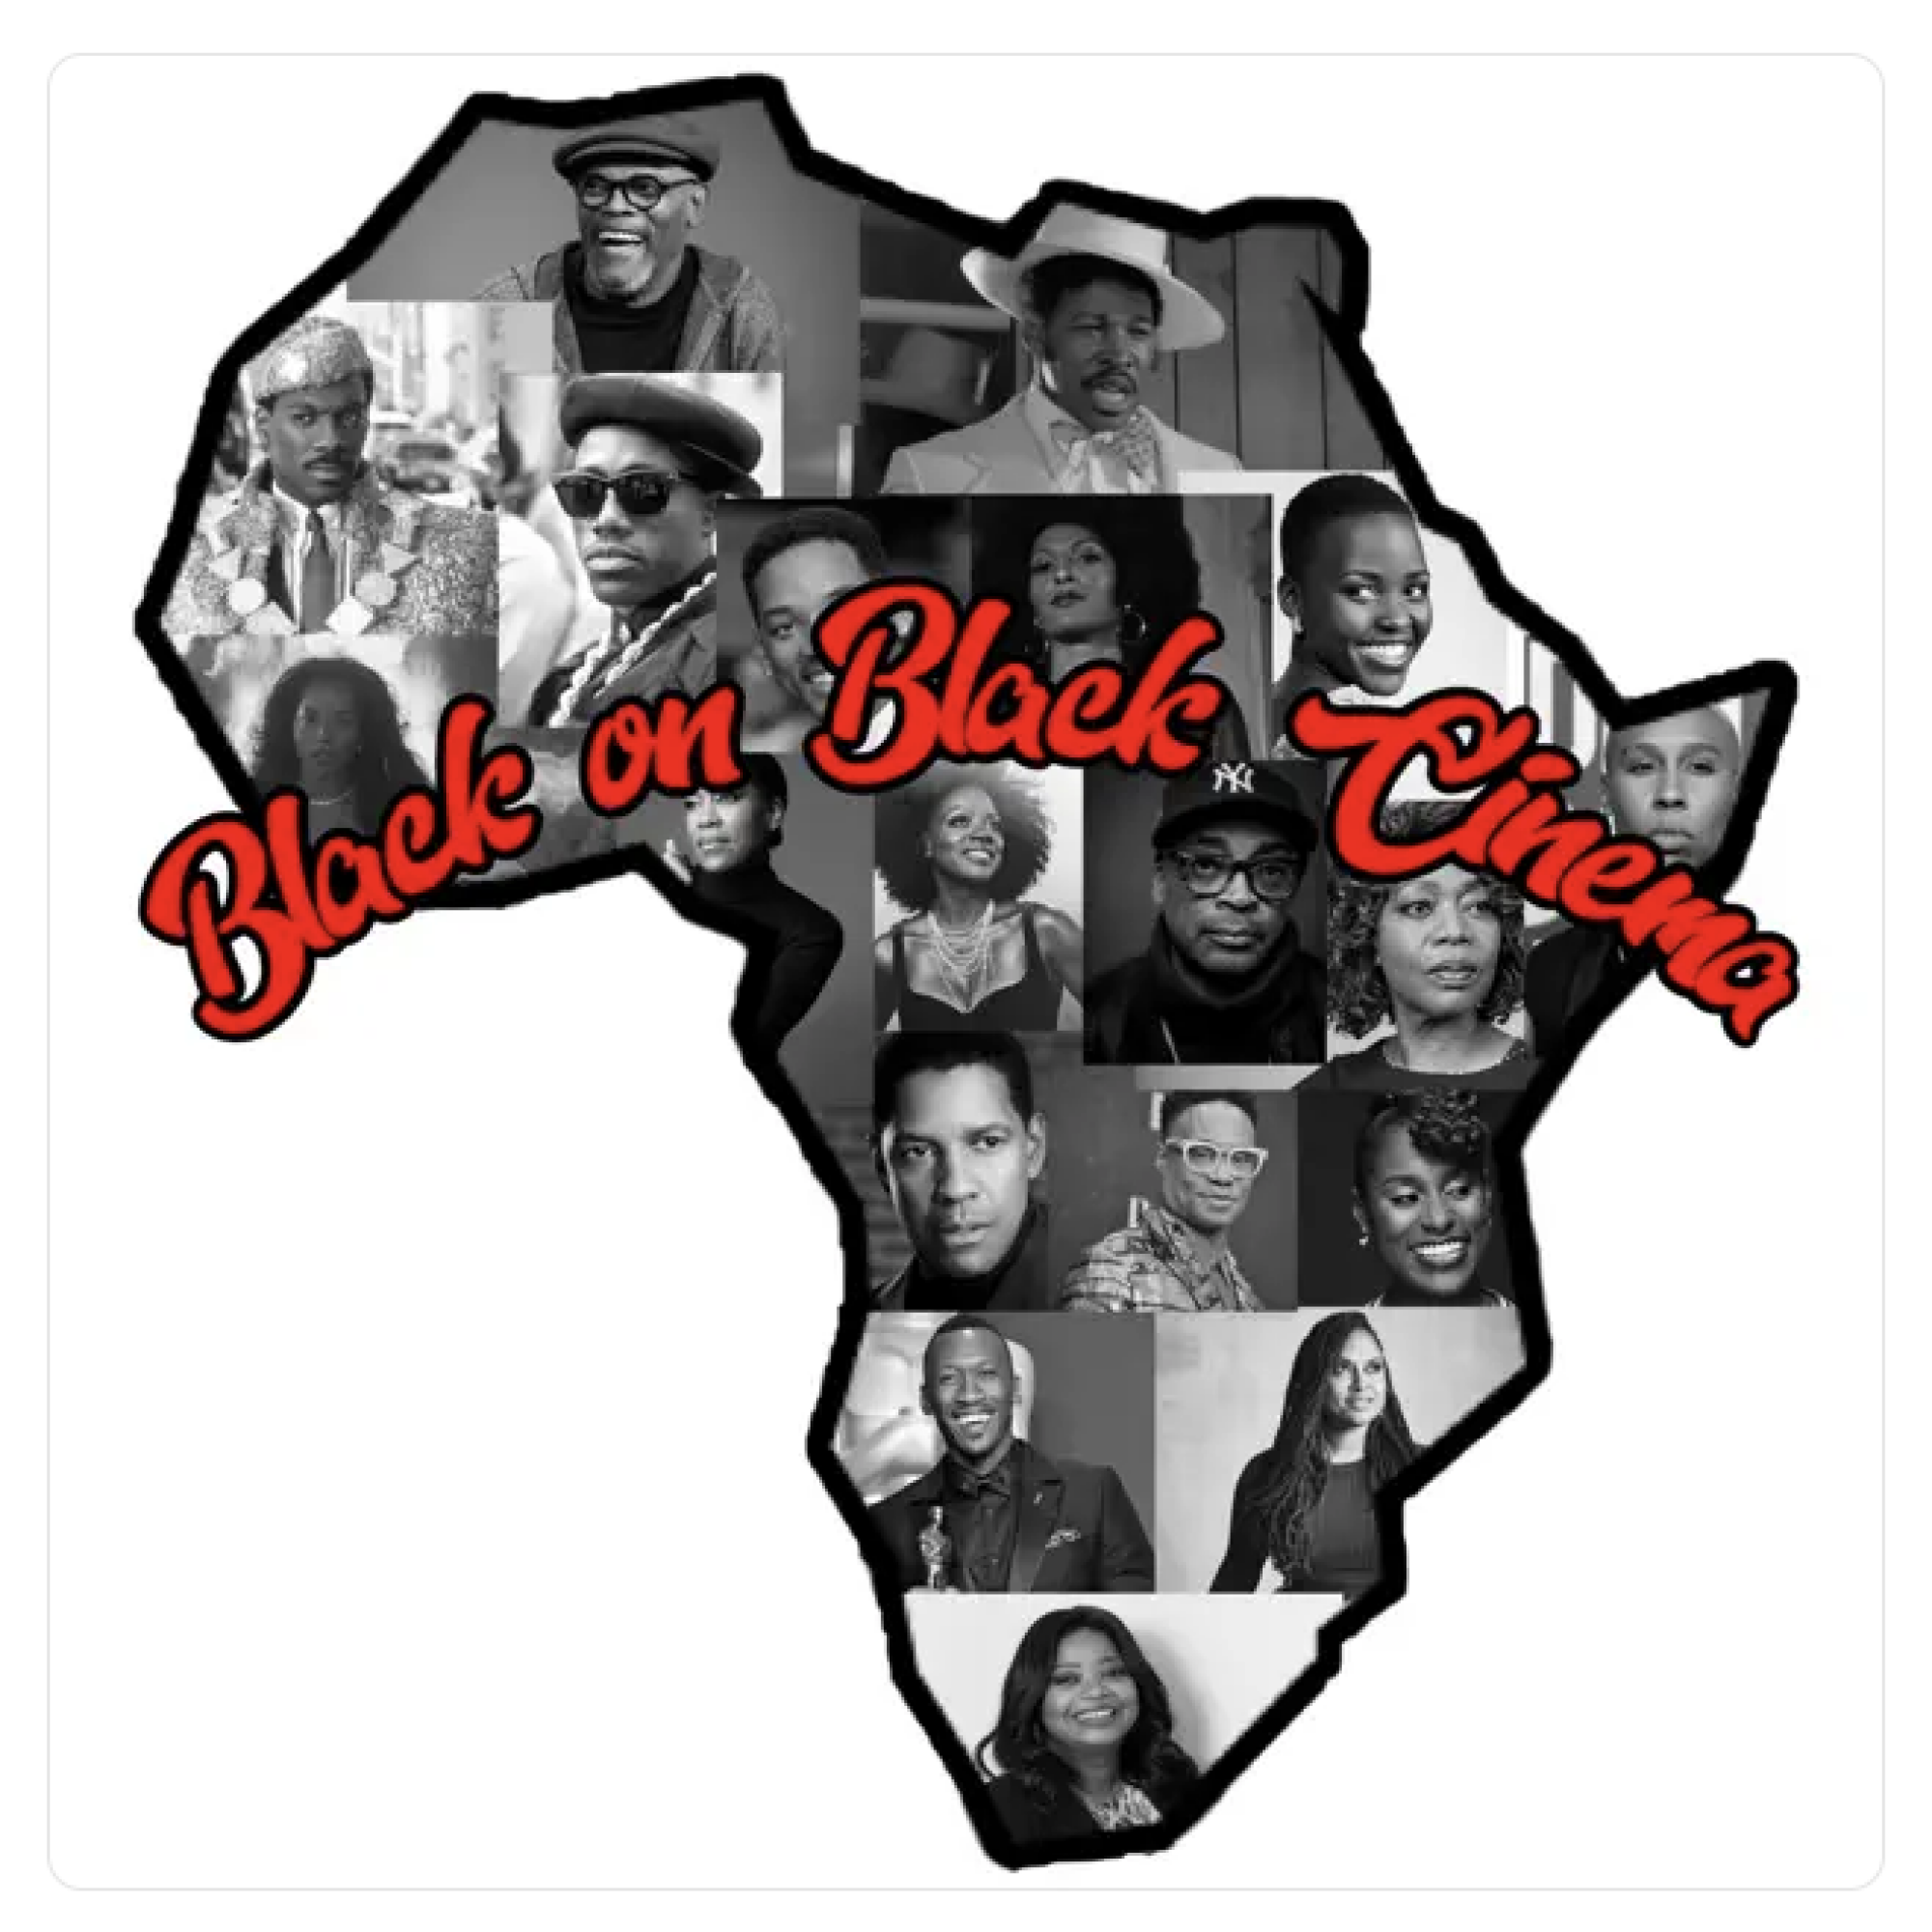 Black on Black Cinema podcast logo